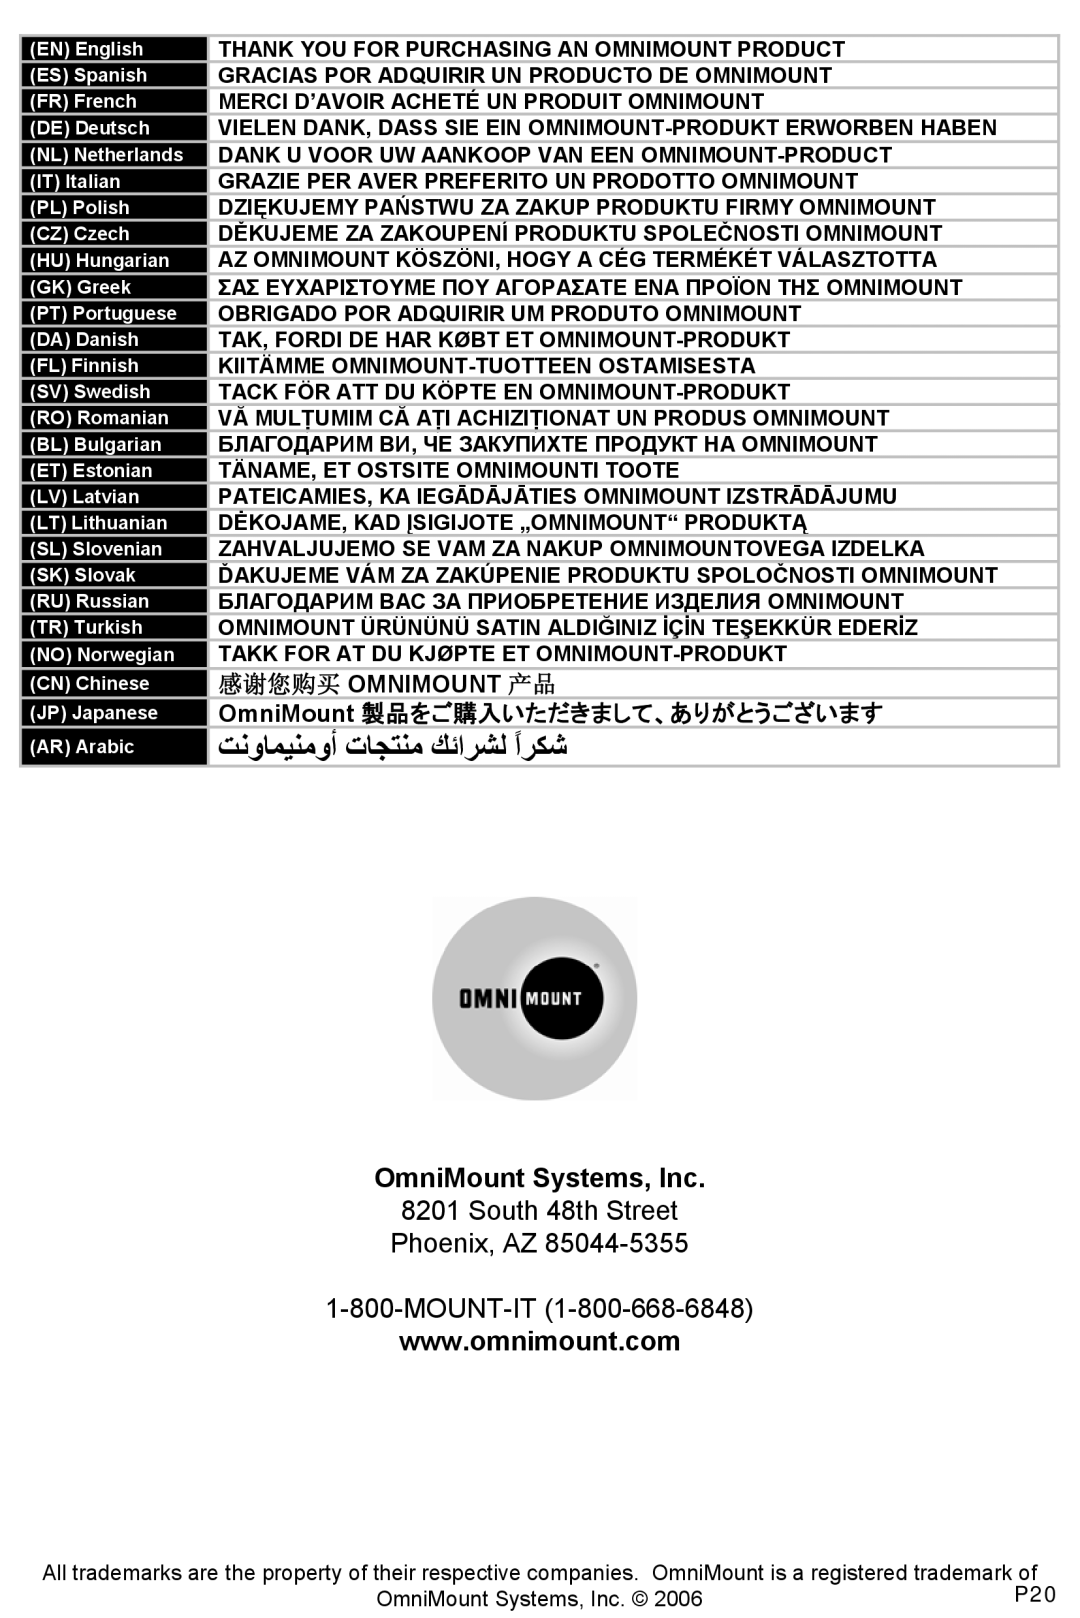 Omnimount FP-CL, OM10028 manual OmniMount Systems, Inc, ﺖﻧوﺎﻤﻴﻨﻣوأ تﺎﺠﺘﻨﻣ ﻚﺋاﺮﺸﻟ اﺮﻜﺷً, 感谢您购买 Omnimount 产品 